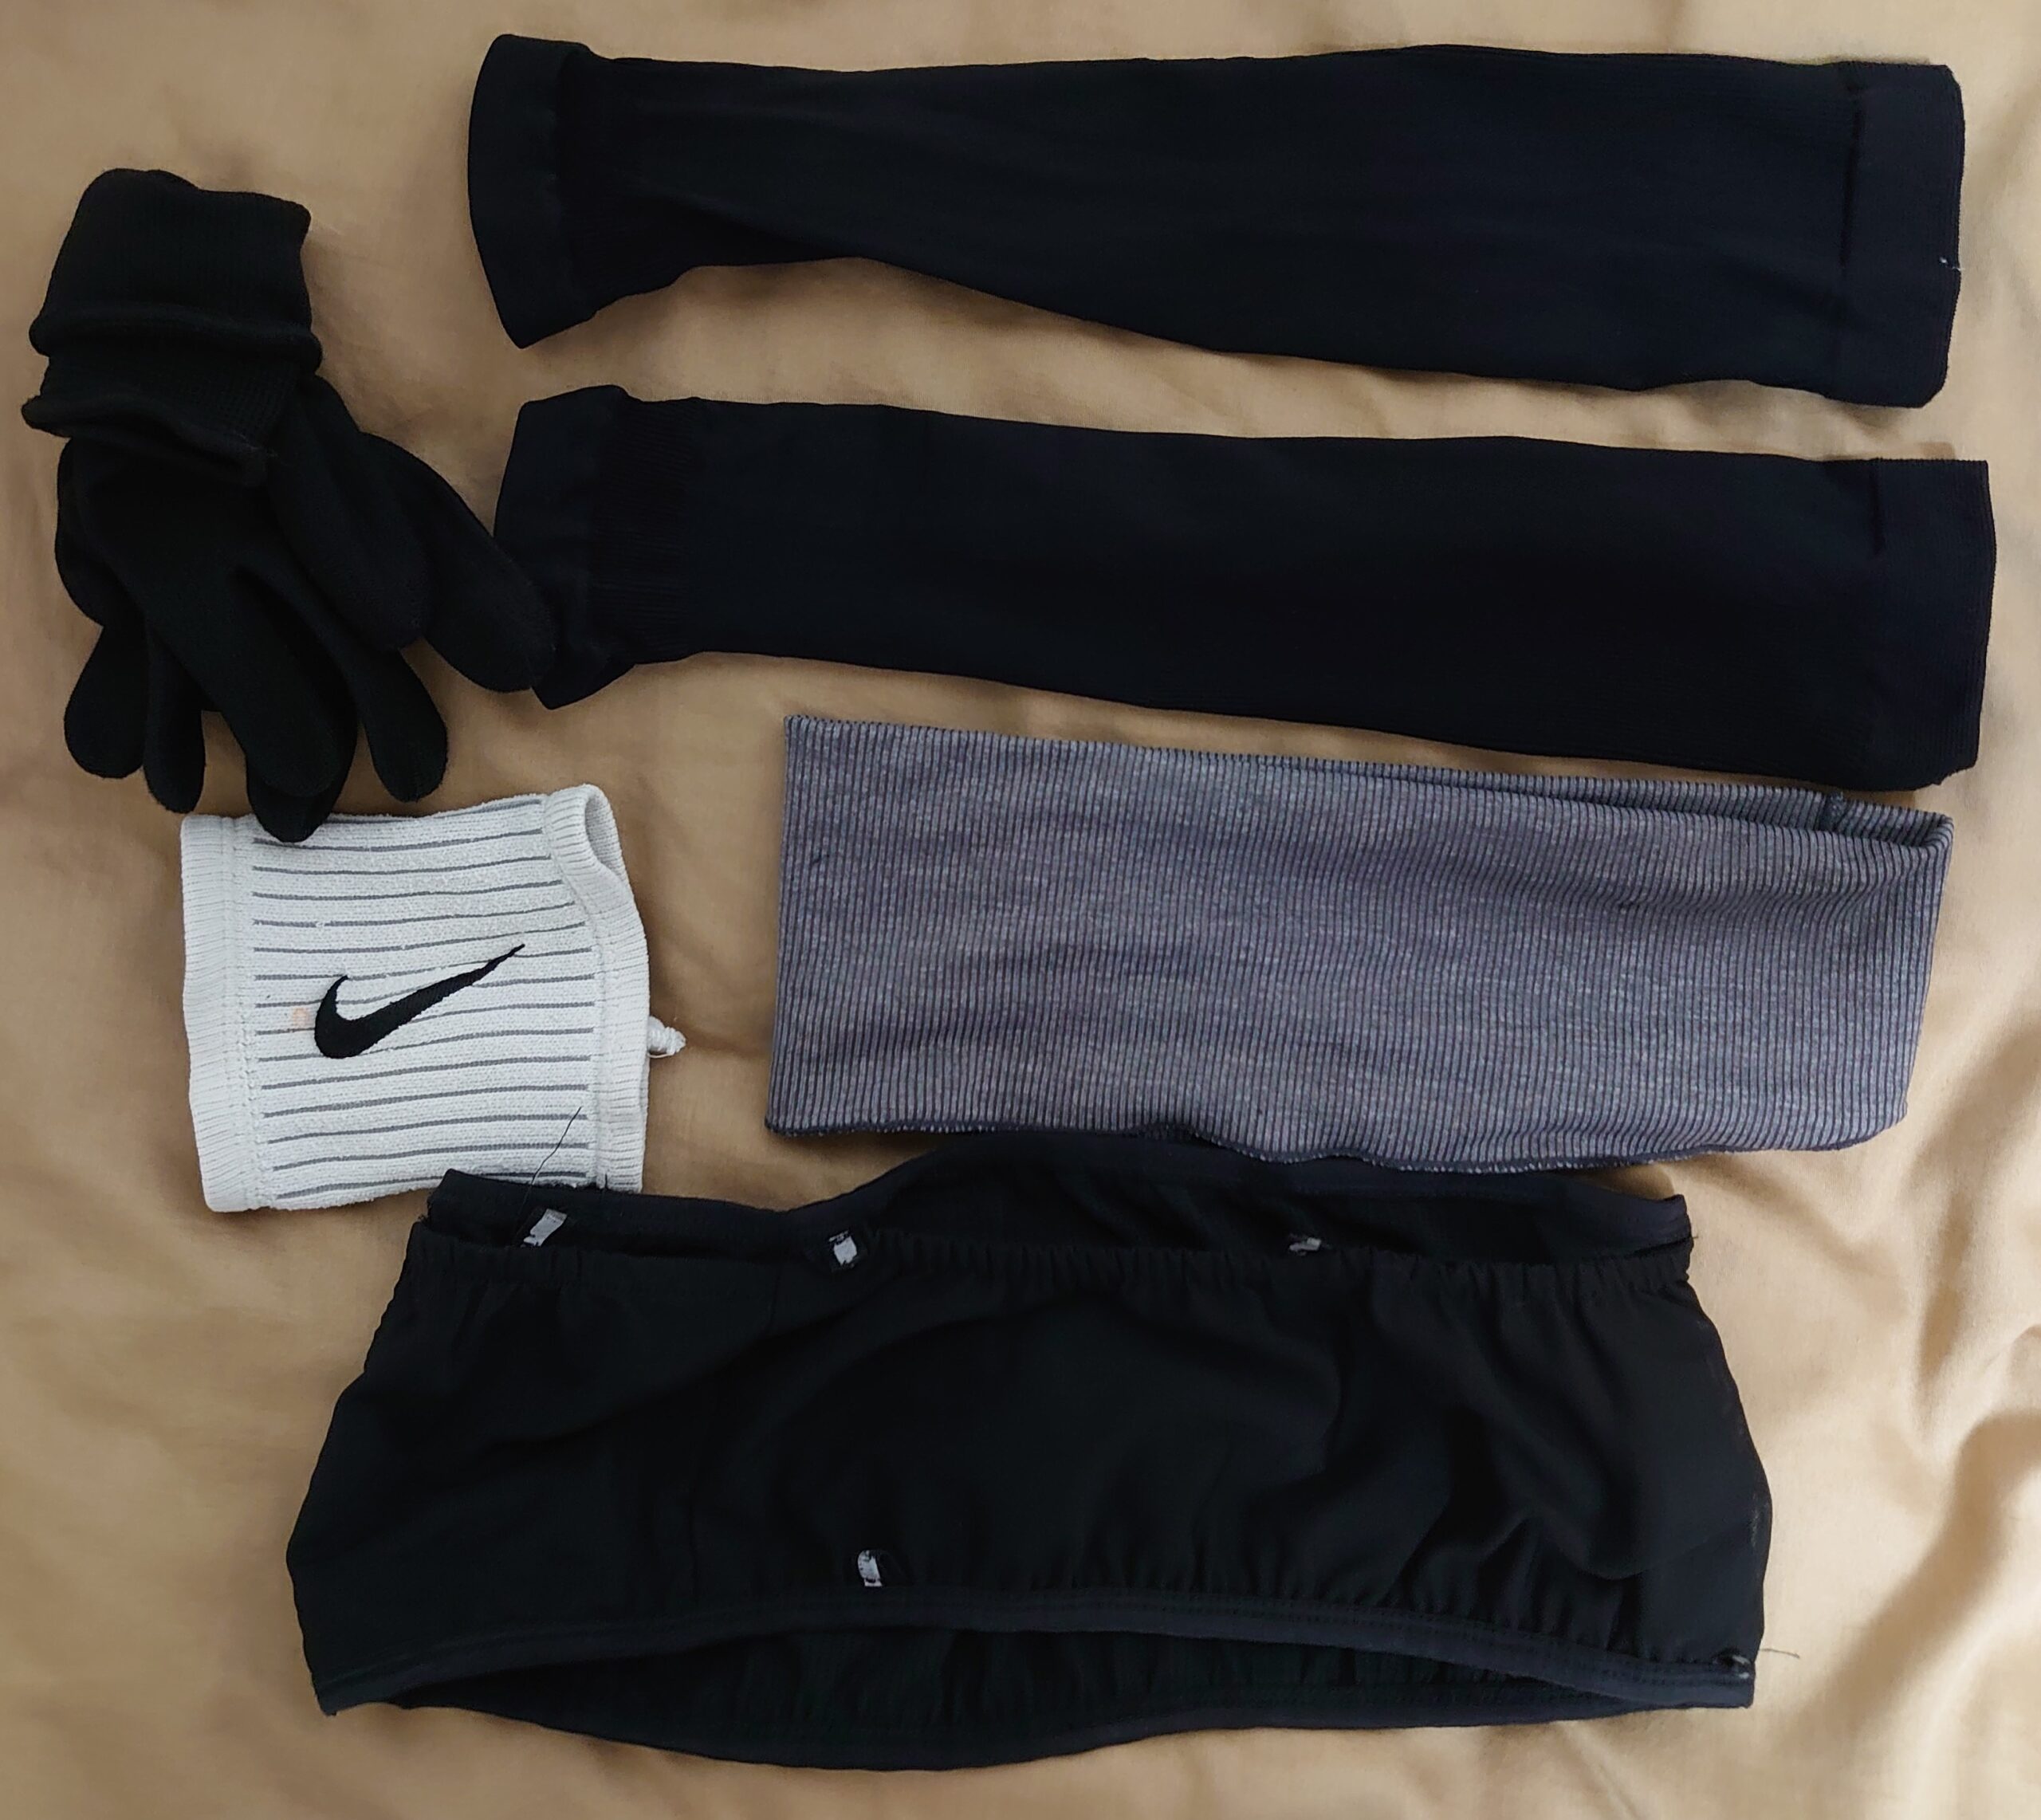 Nikeヘッドバンド(ヘアバンド)・Nikeリストバンド・Inner-Factウエストベルト・100均Wattsの300円カーフスリーブ(カーフサポーター)・100均手袋